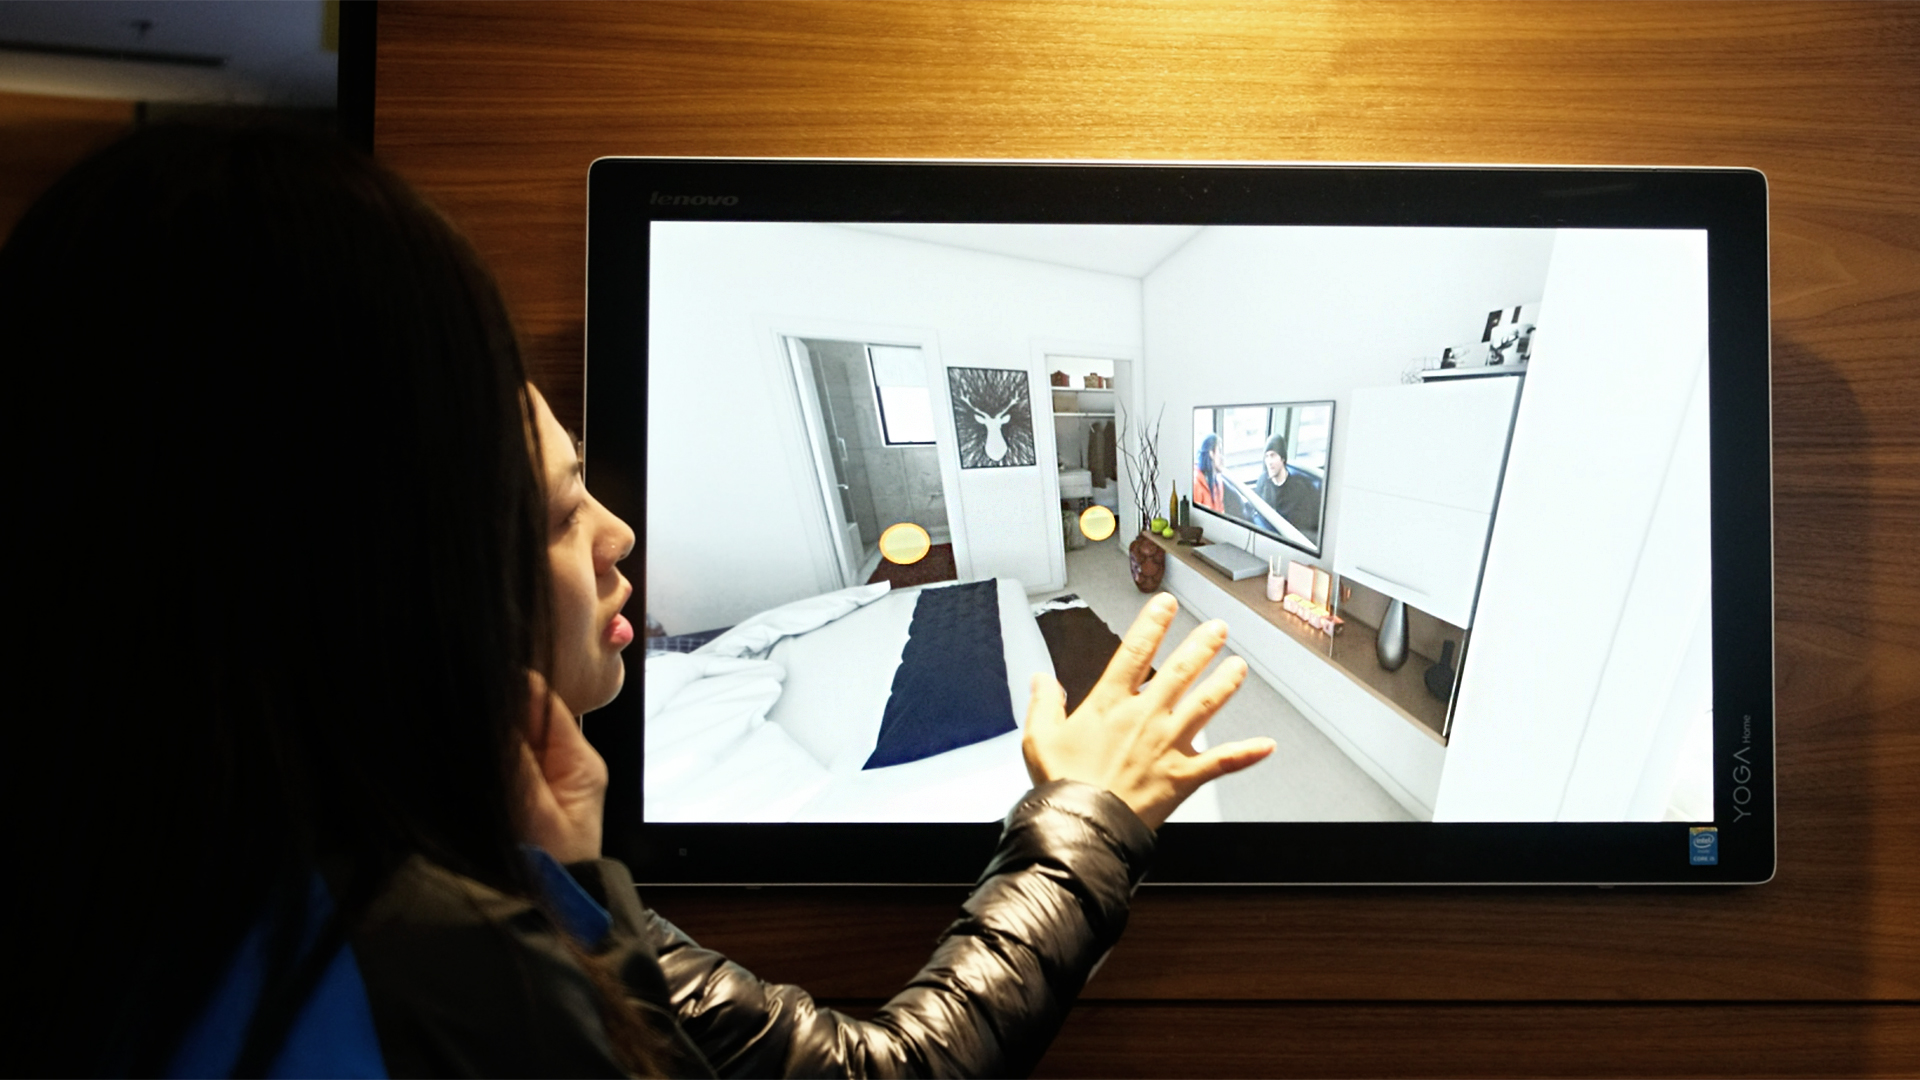 Park Grand VR Walkthrough at Touch Screen Display